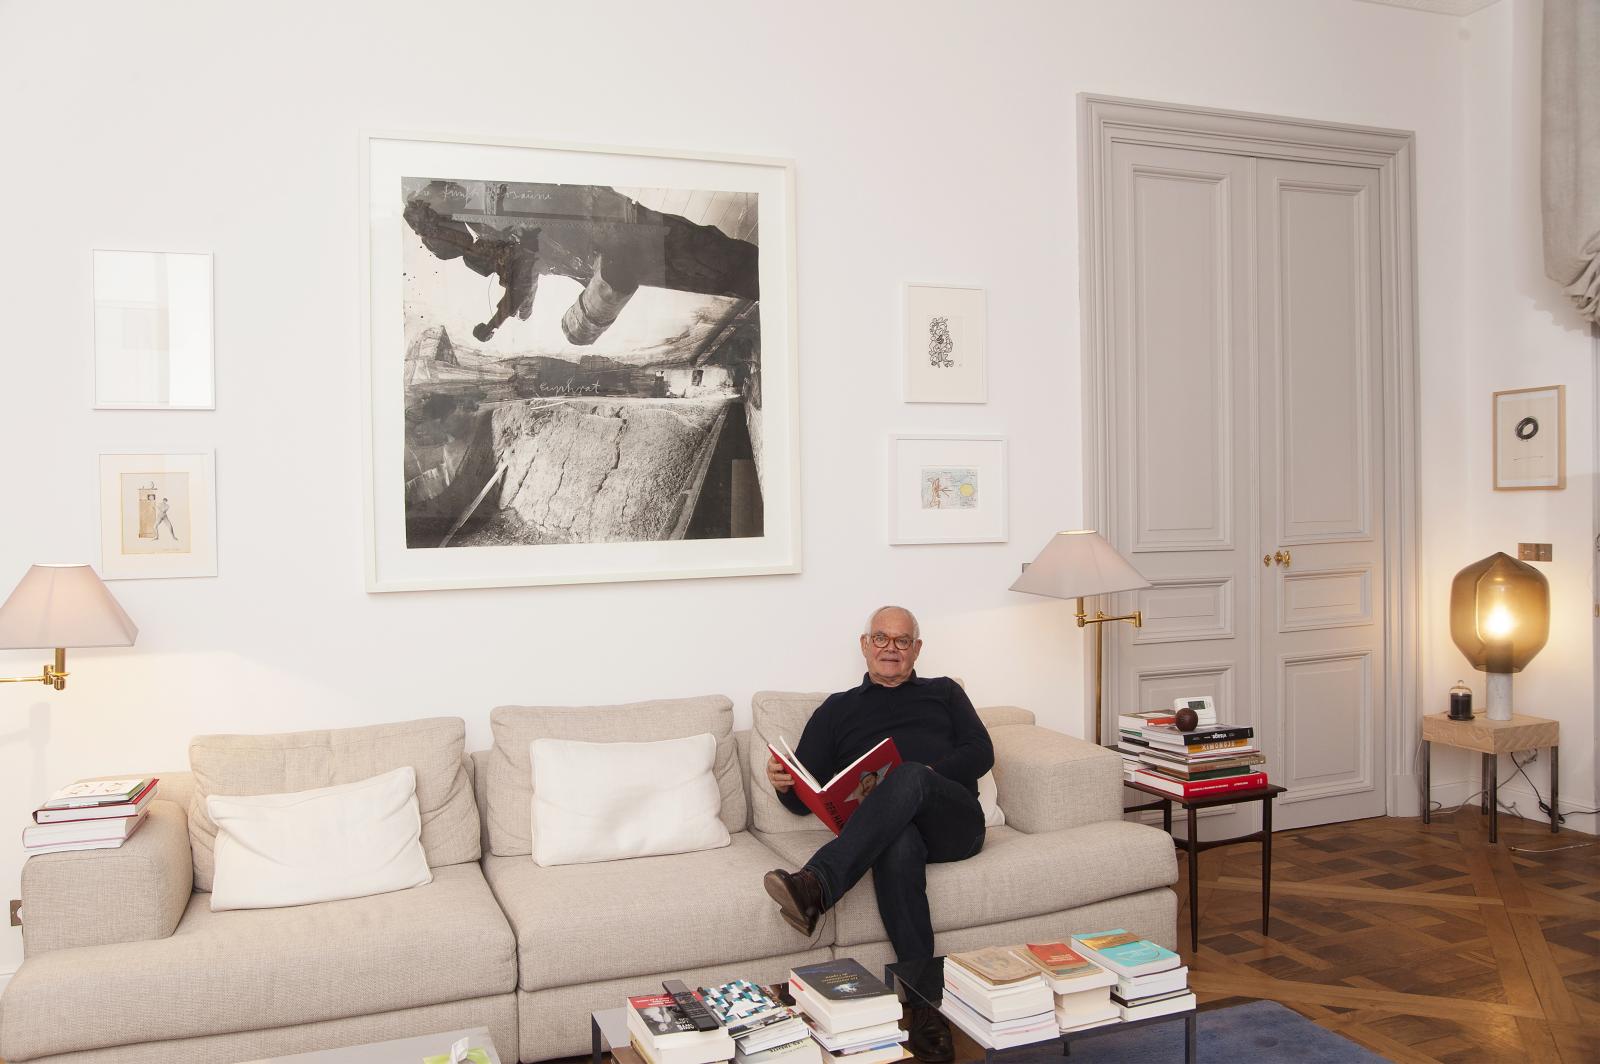 Jean-François Dubos: The Man Who Gave Paris Photo a Chance